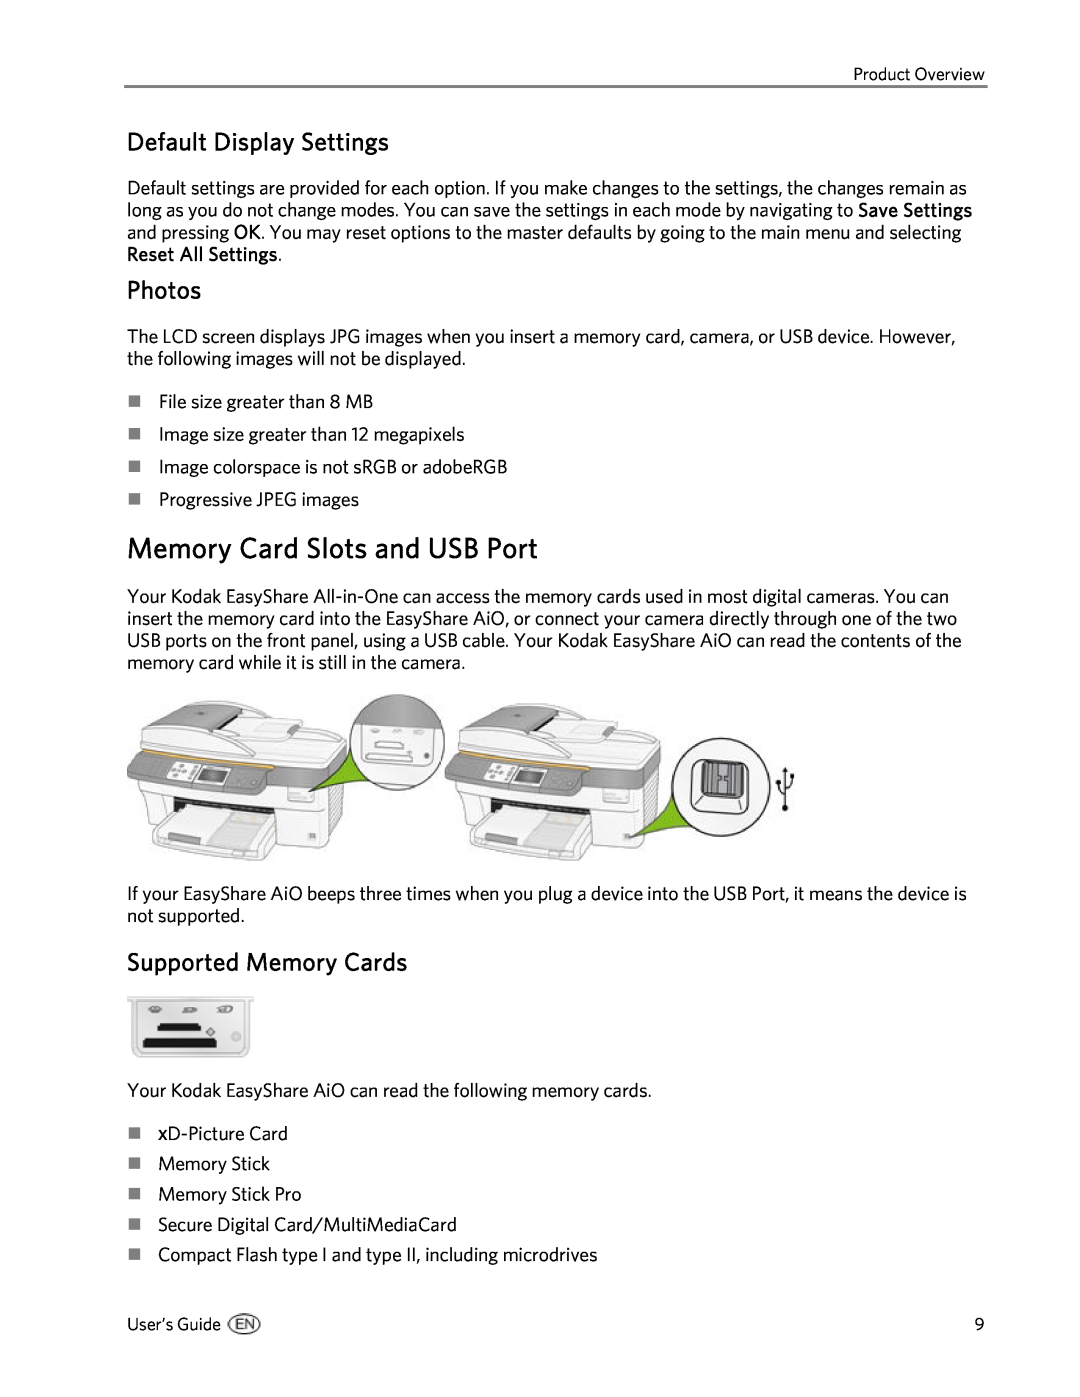 Kodak 5500 manual Memory Card Slots and USB Port, Default Display Settings, Photos, Supported Memory Cards 